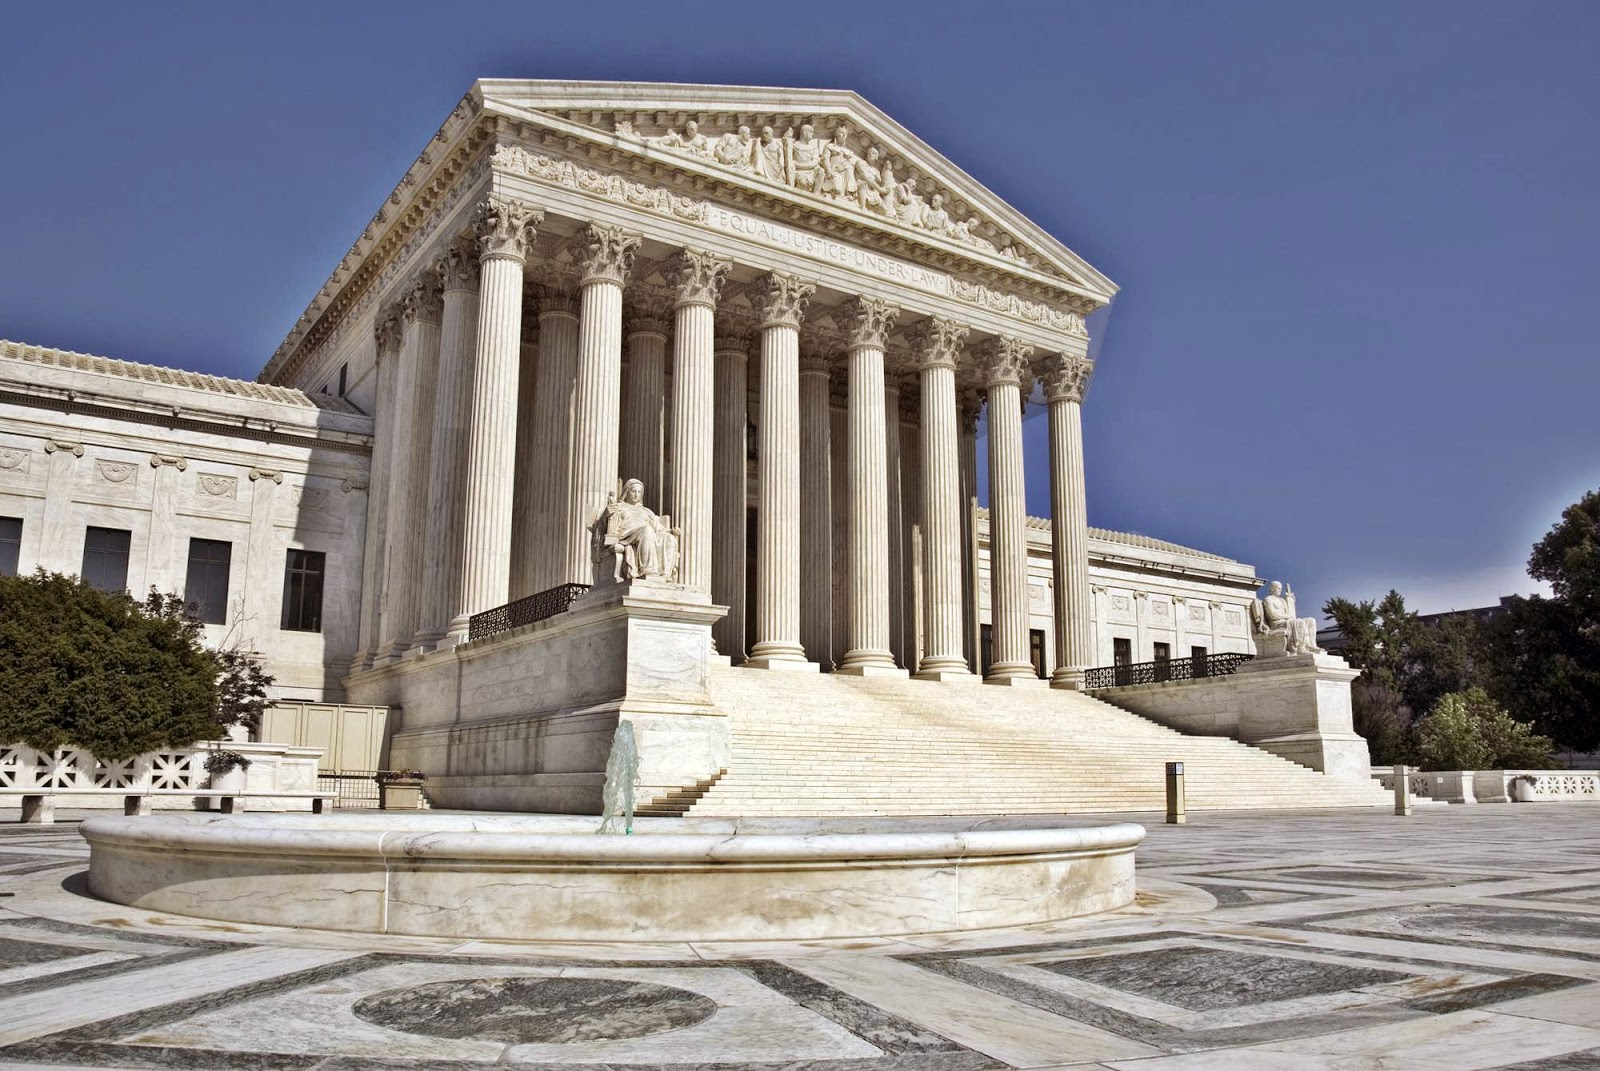 Brady vs. united states (supreme court case)- a description in simple words please...?